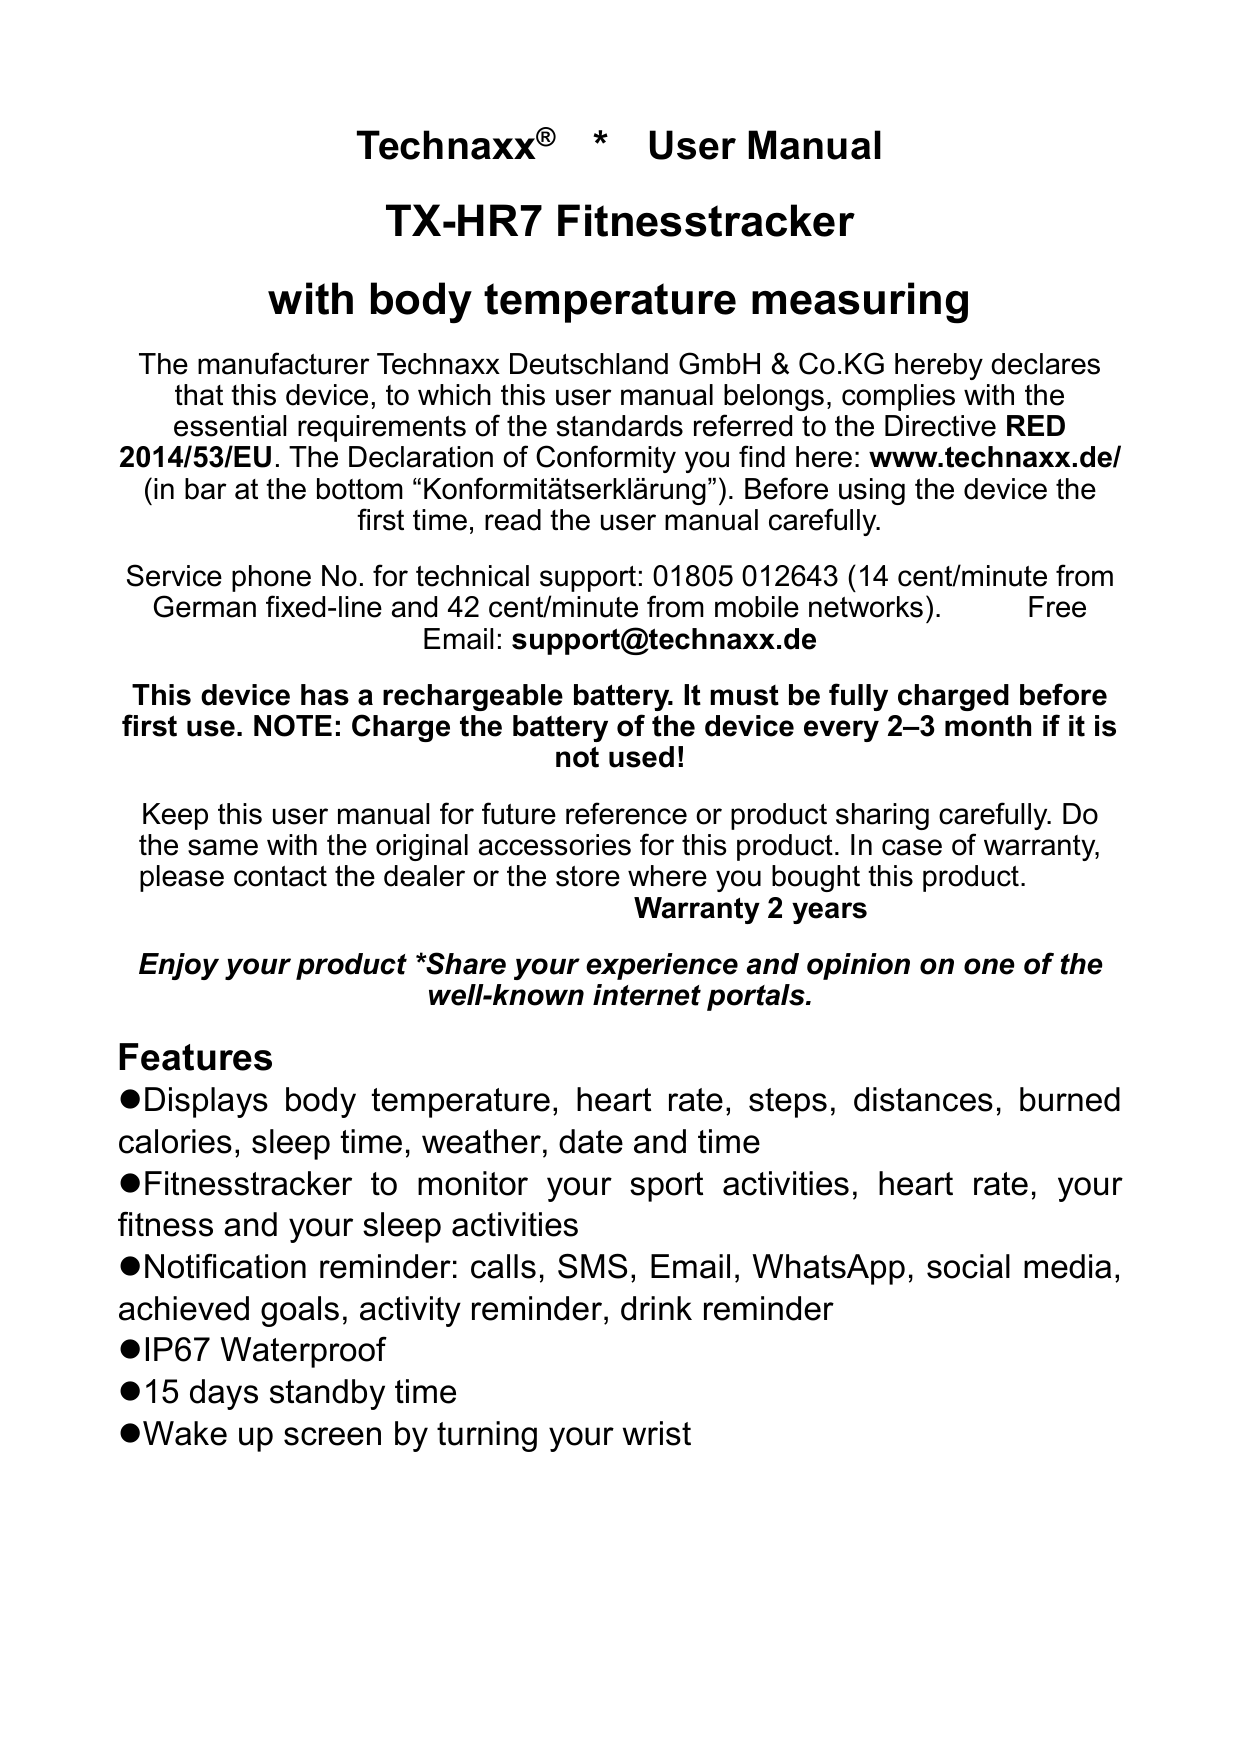 Technaxx TX-HR7 Fitnesstracker Owner\'s Manual | Manualzz | Fitness-Tracker